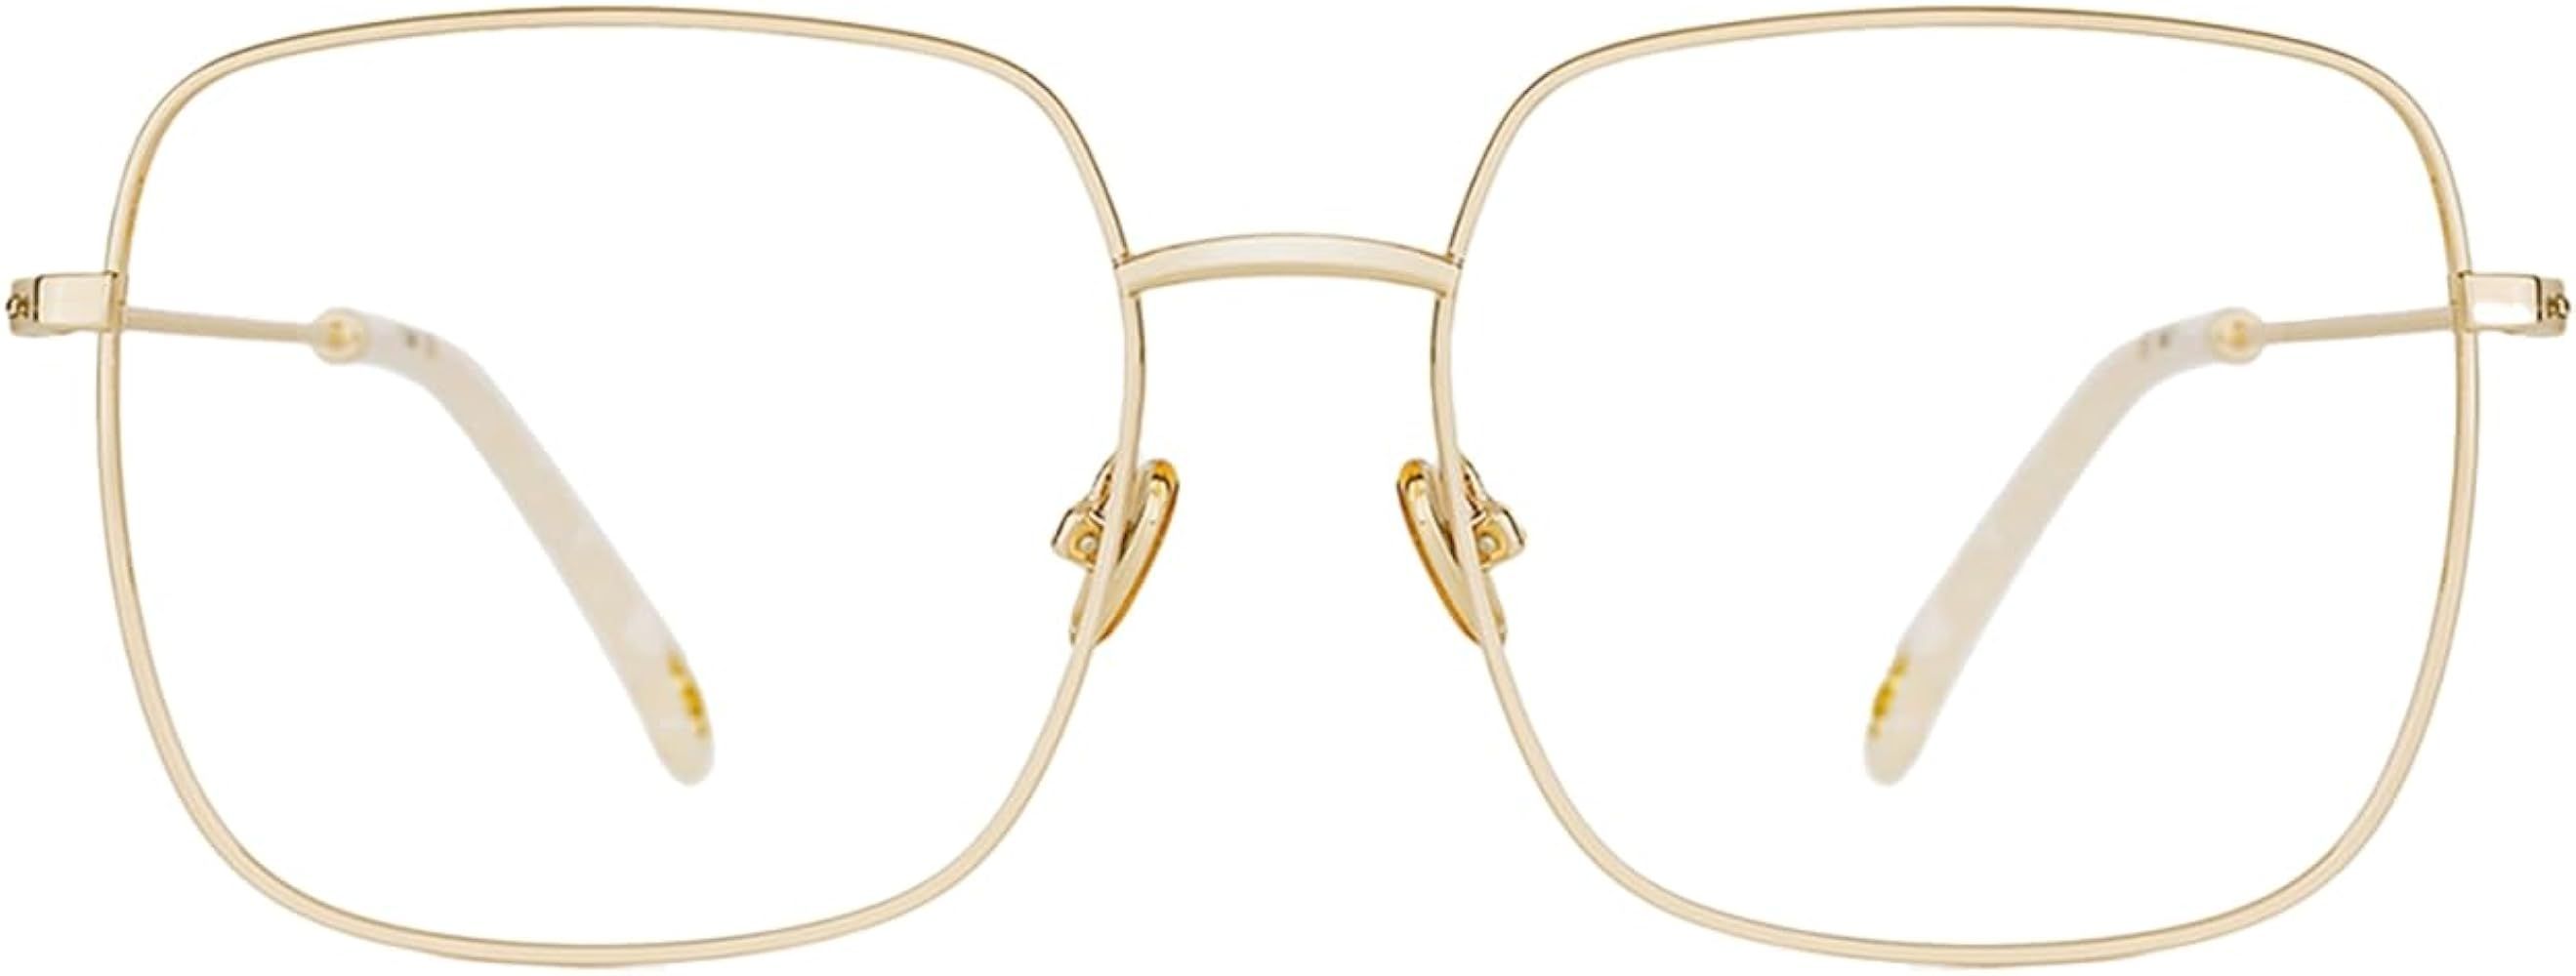 TIJN Trendy Square Clear Glasses for Women Men Non-Prescription Eyeglasses,Lightweight Metal Fram... | Amazon (US)